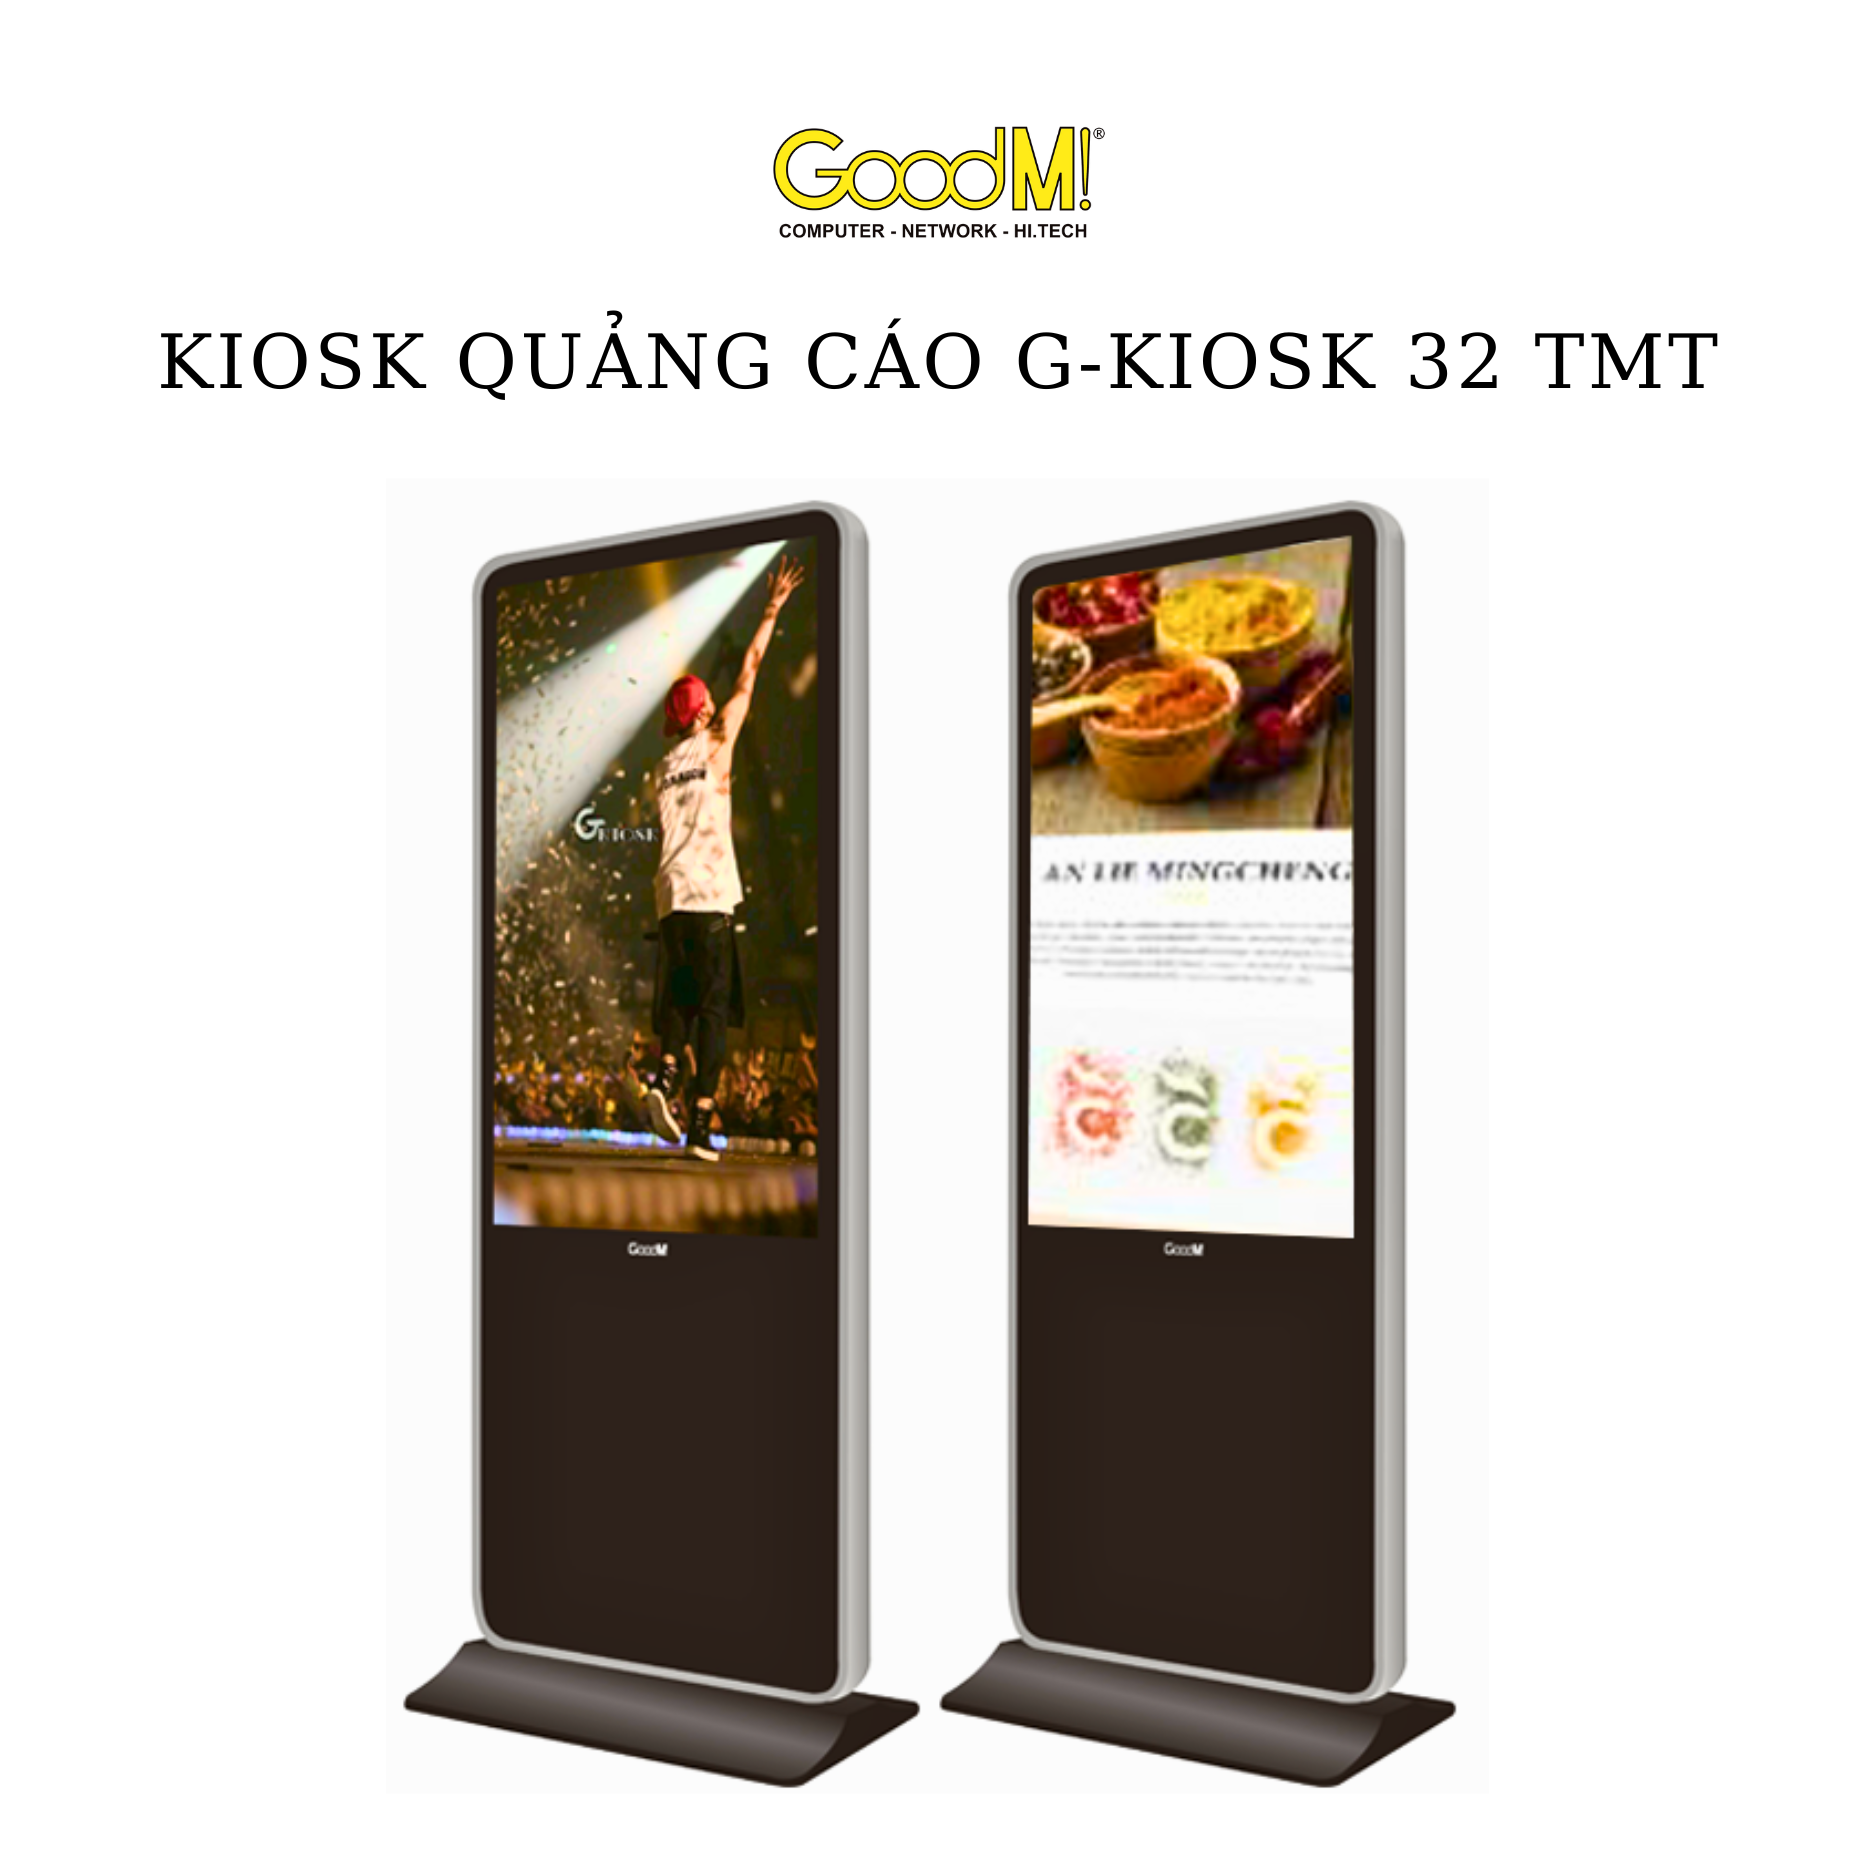  Kiosk Quảng Cáo G-KIOSK 32 TMT 